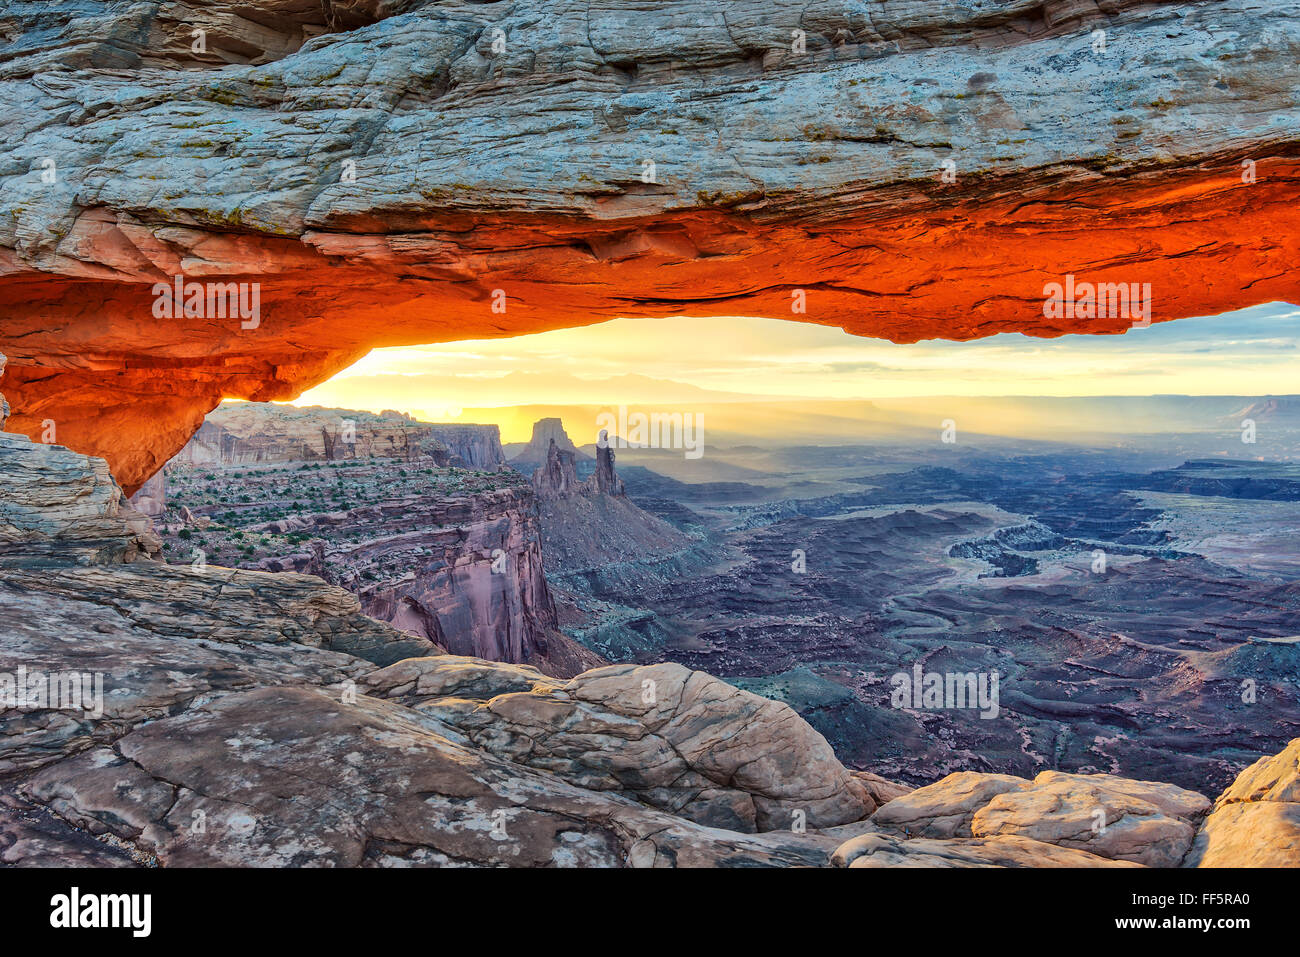 Mesa Arch in Canyonlands National Park, Utah Stock Photo